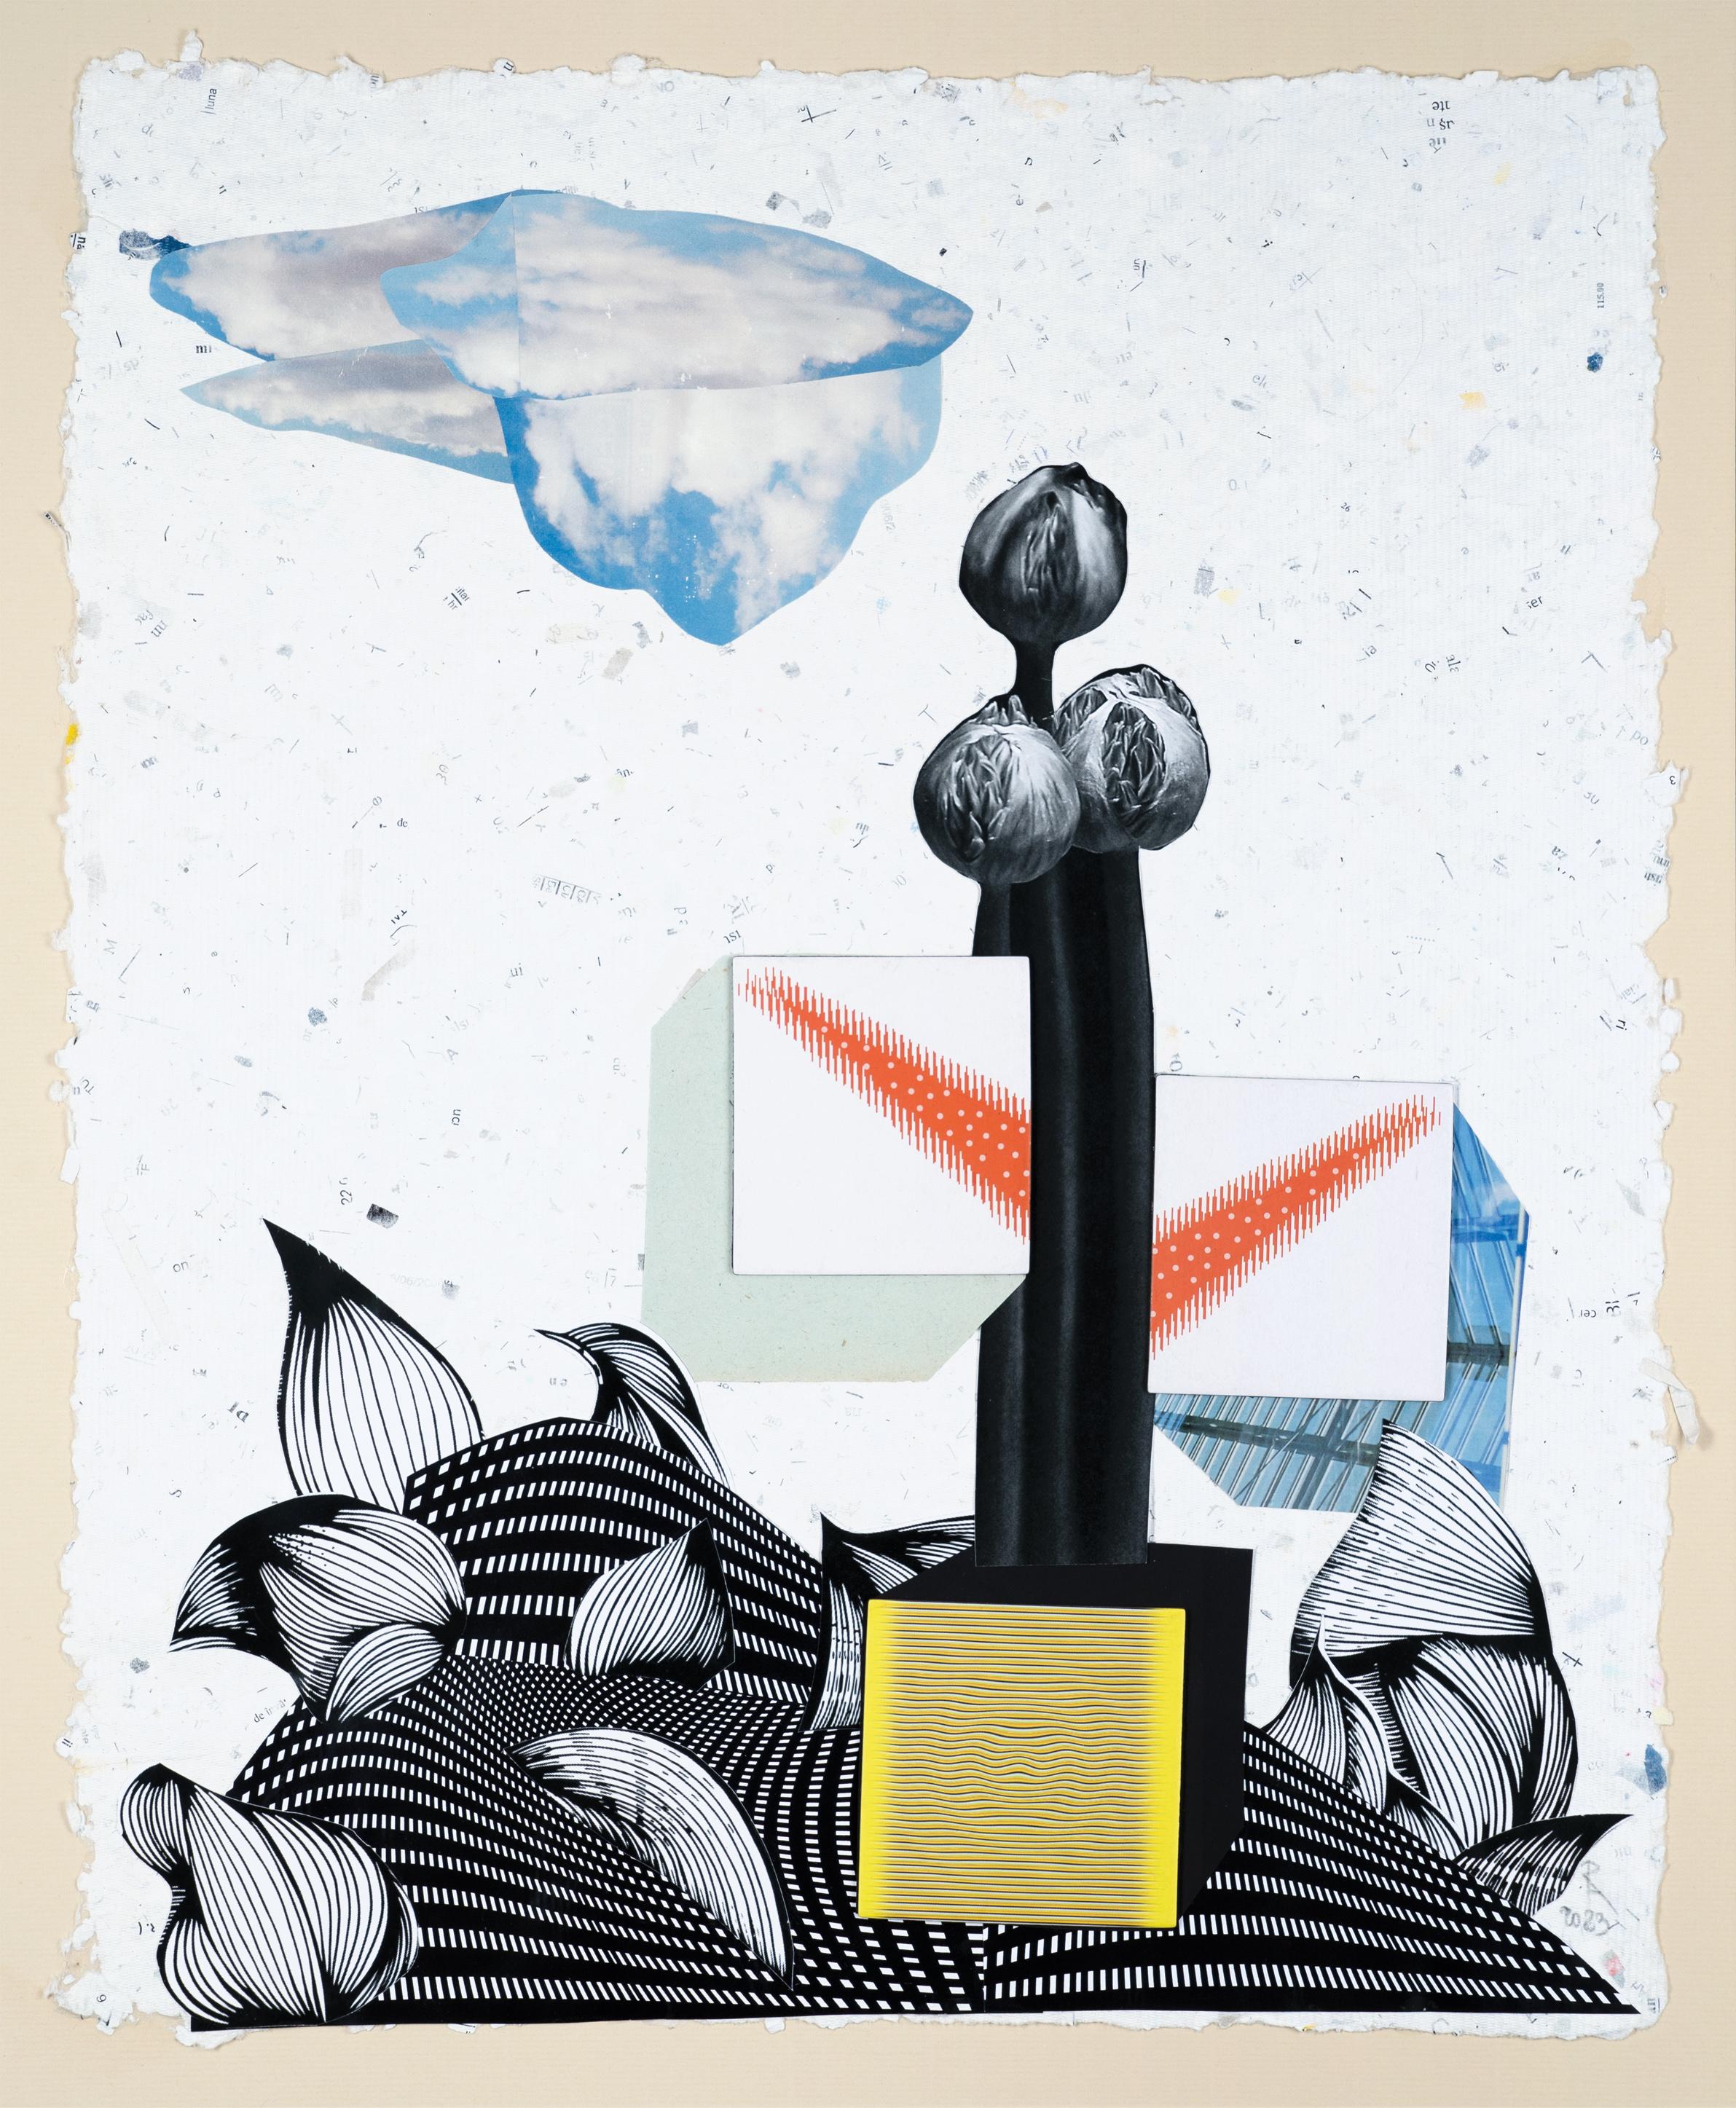 The Flower - Paper, Landscape, Collage, 21st Century, Surrealism - Mixed Media Art by Raluca Arnăutu